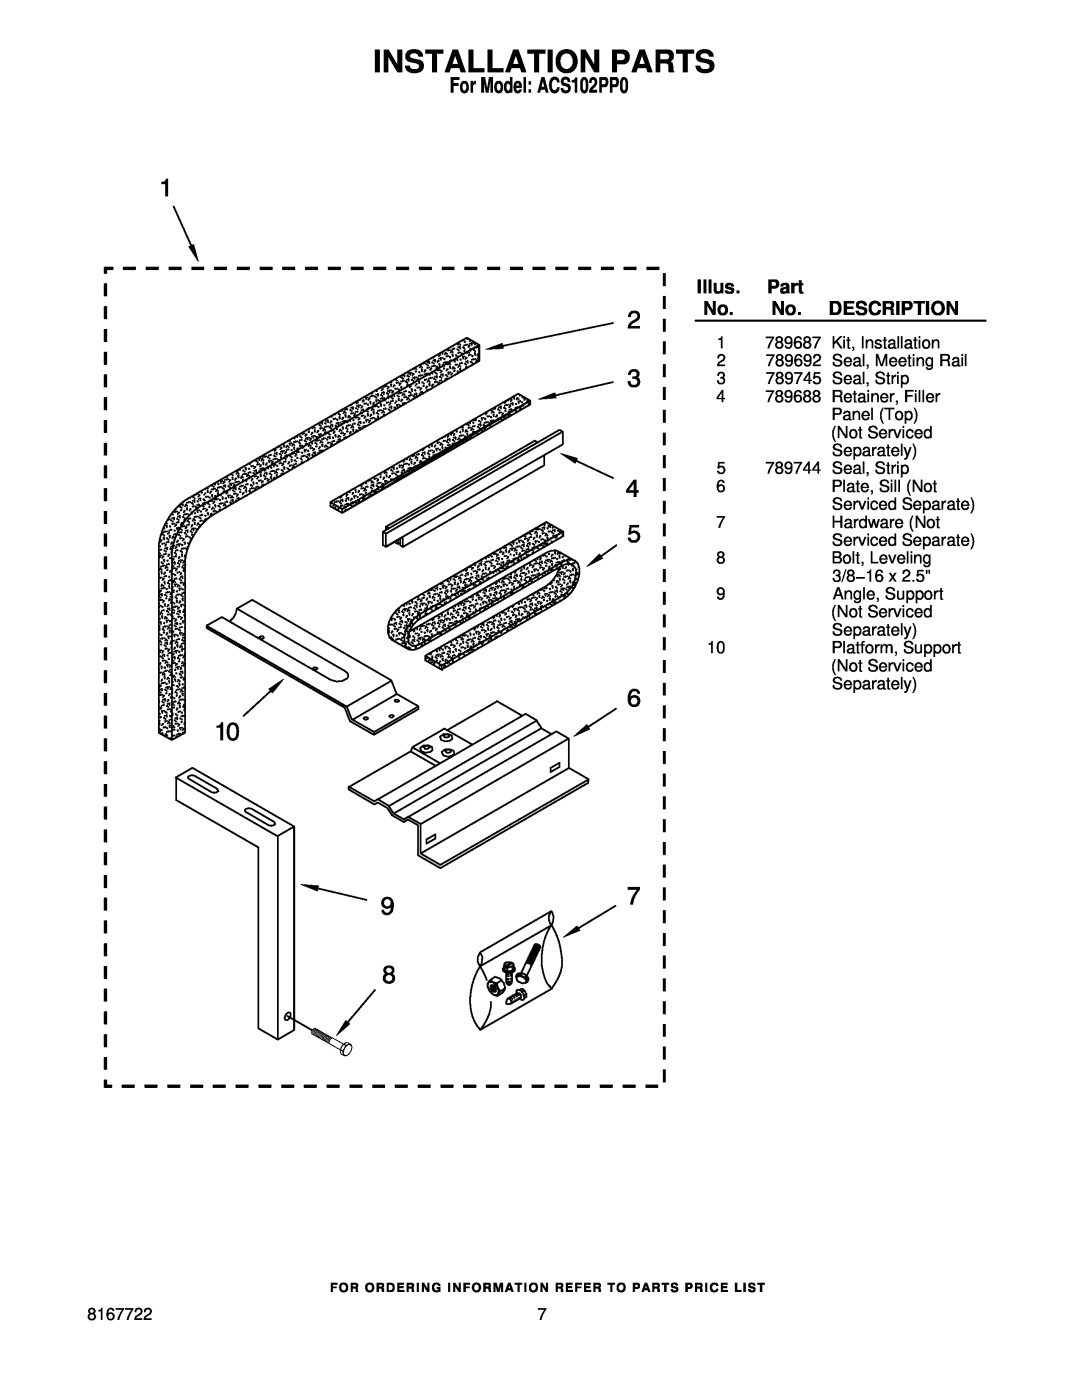 Whirlpool manual Installation Parts, Illus, Description, For Model ACS102PP0 